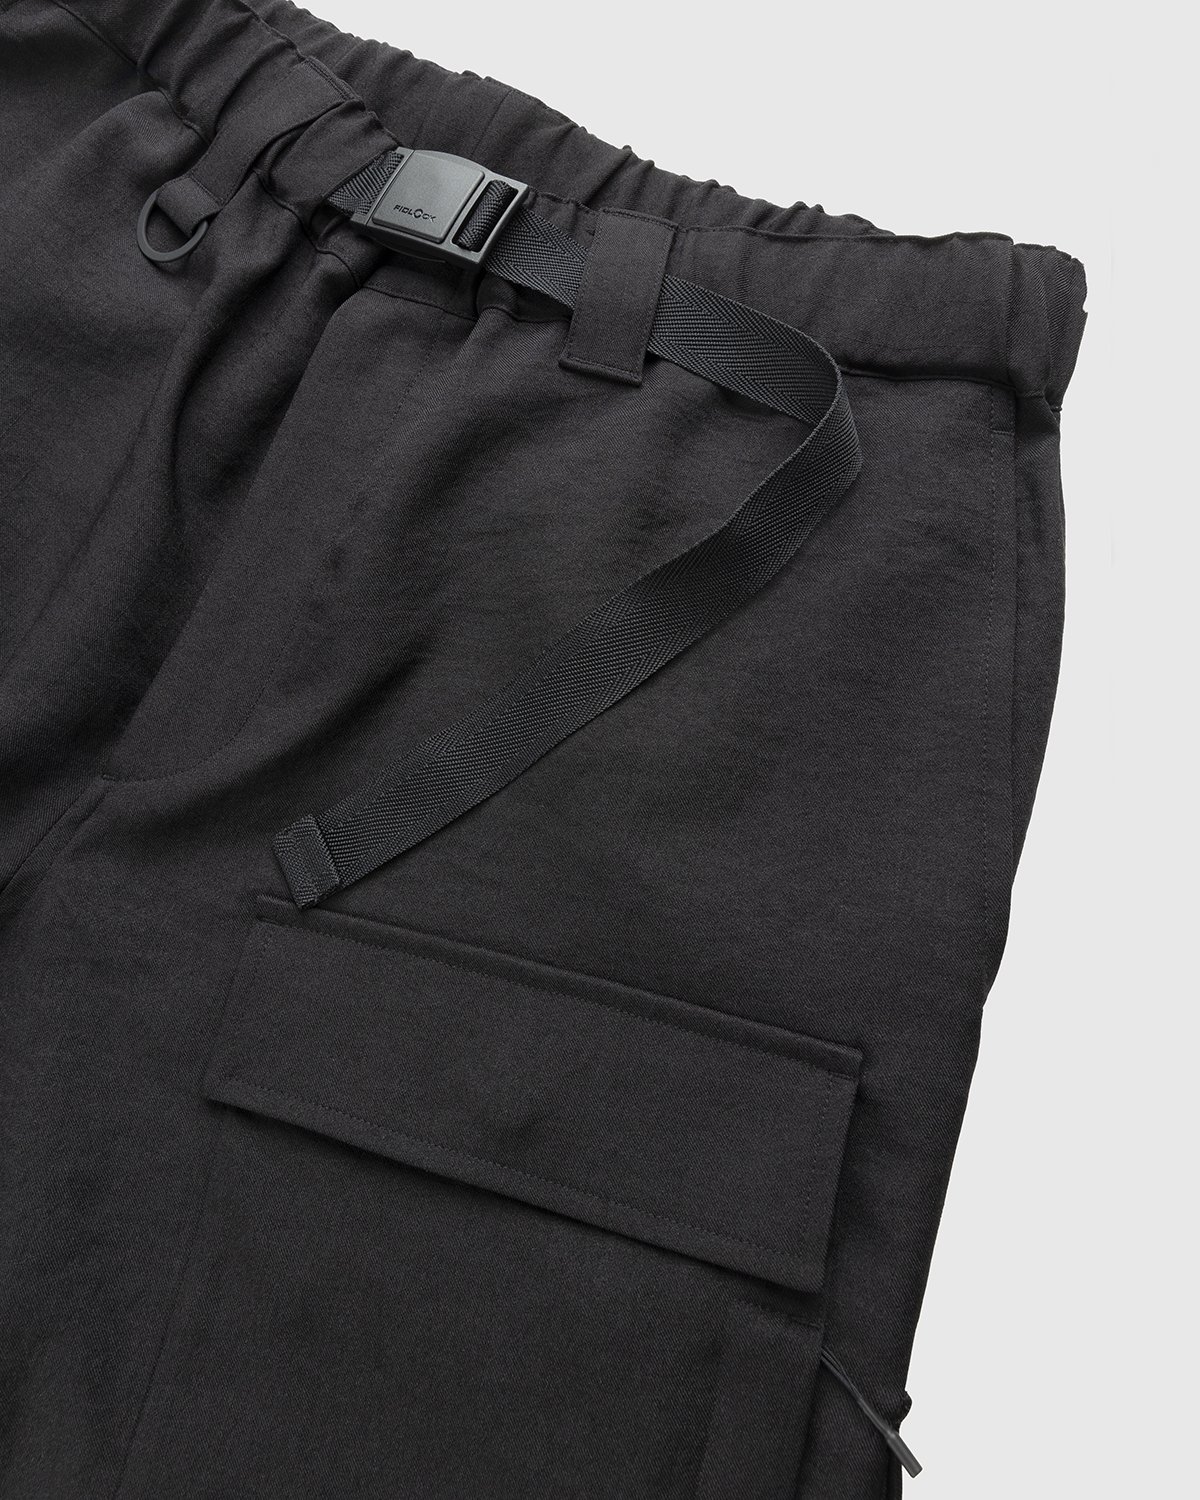 Y-3 - Classic Sport Uniform Cargo Pants Black - Clothing - Black - Image 3